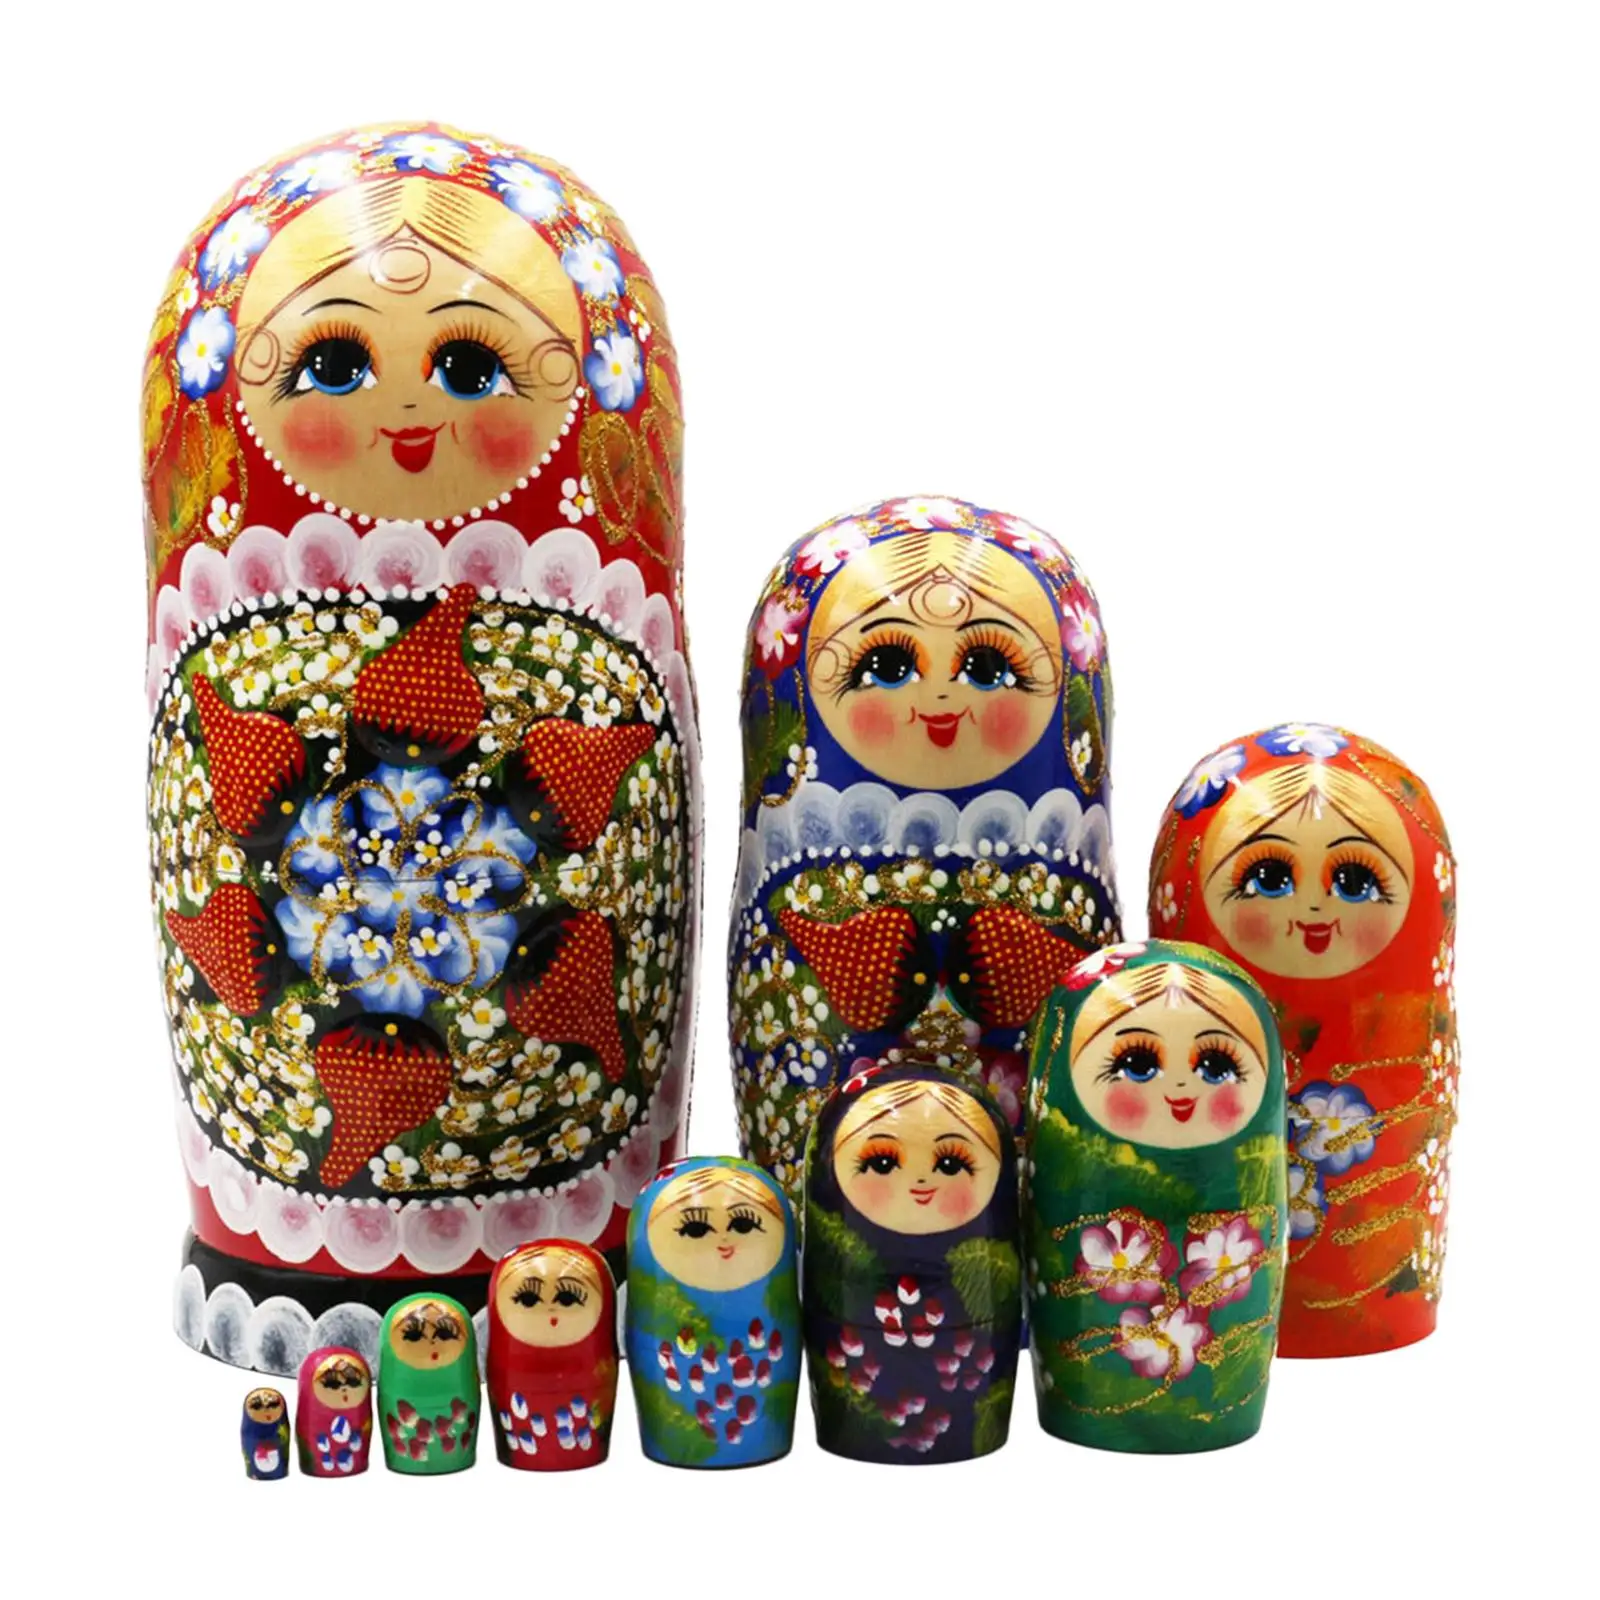 10x Wooden Russian Nesting Doll Wishing Gift Beautiful Matryoshka Decor